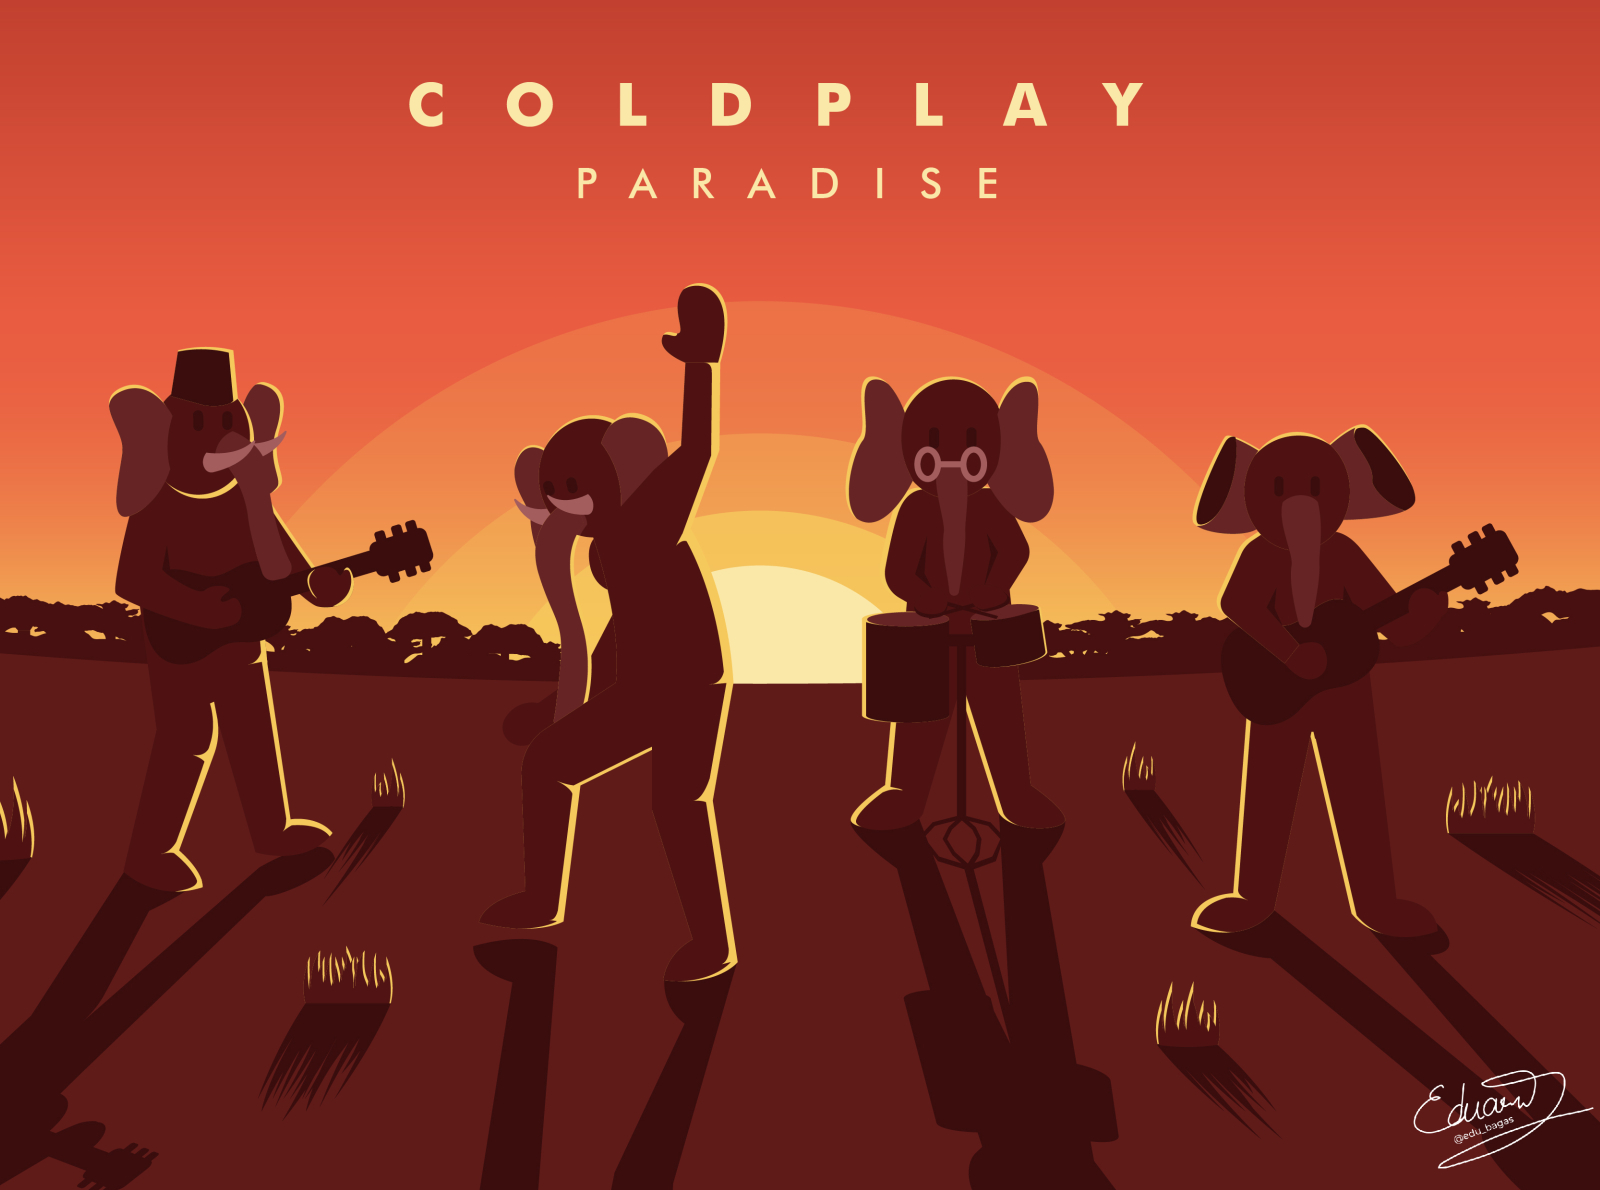 coldplay - paradise lyrics wallpaper  Papel de parede coldplay, Coldplay,  Rock poster